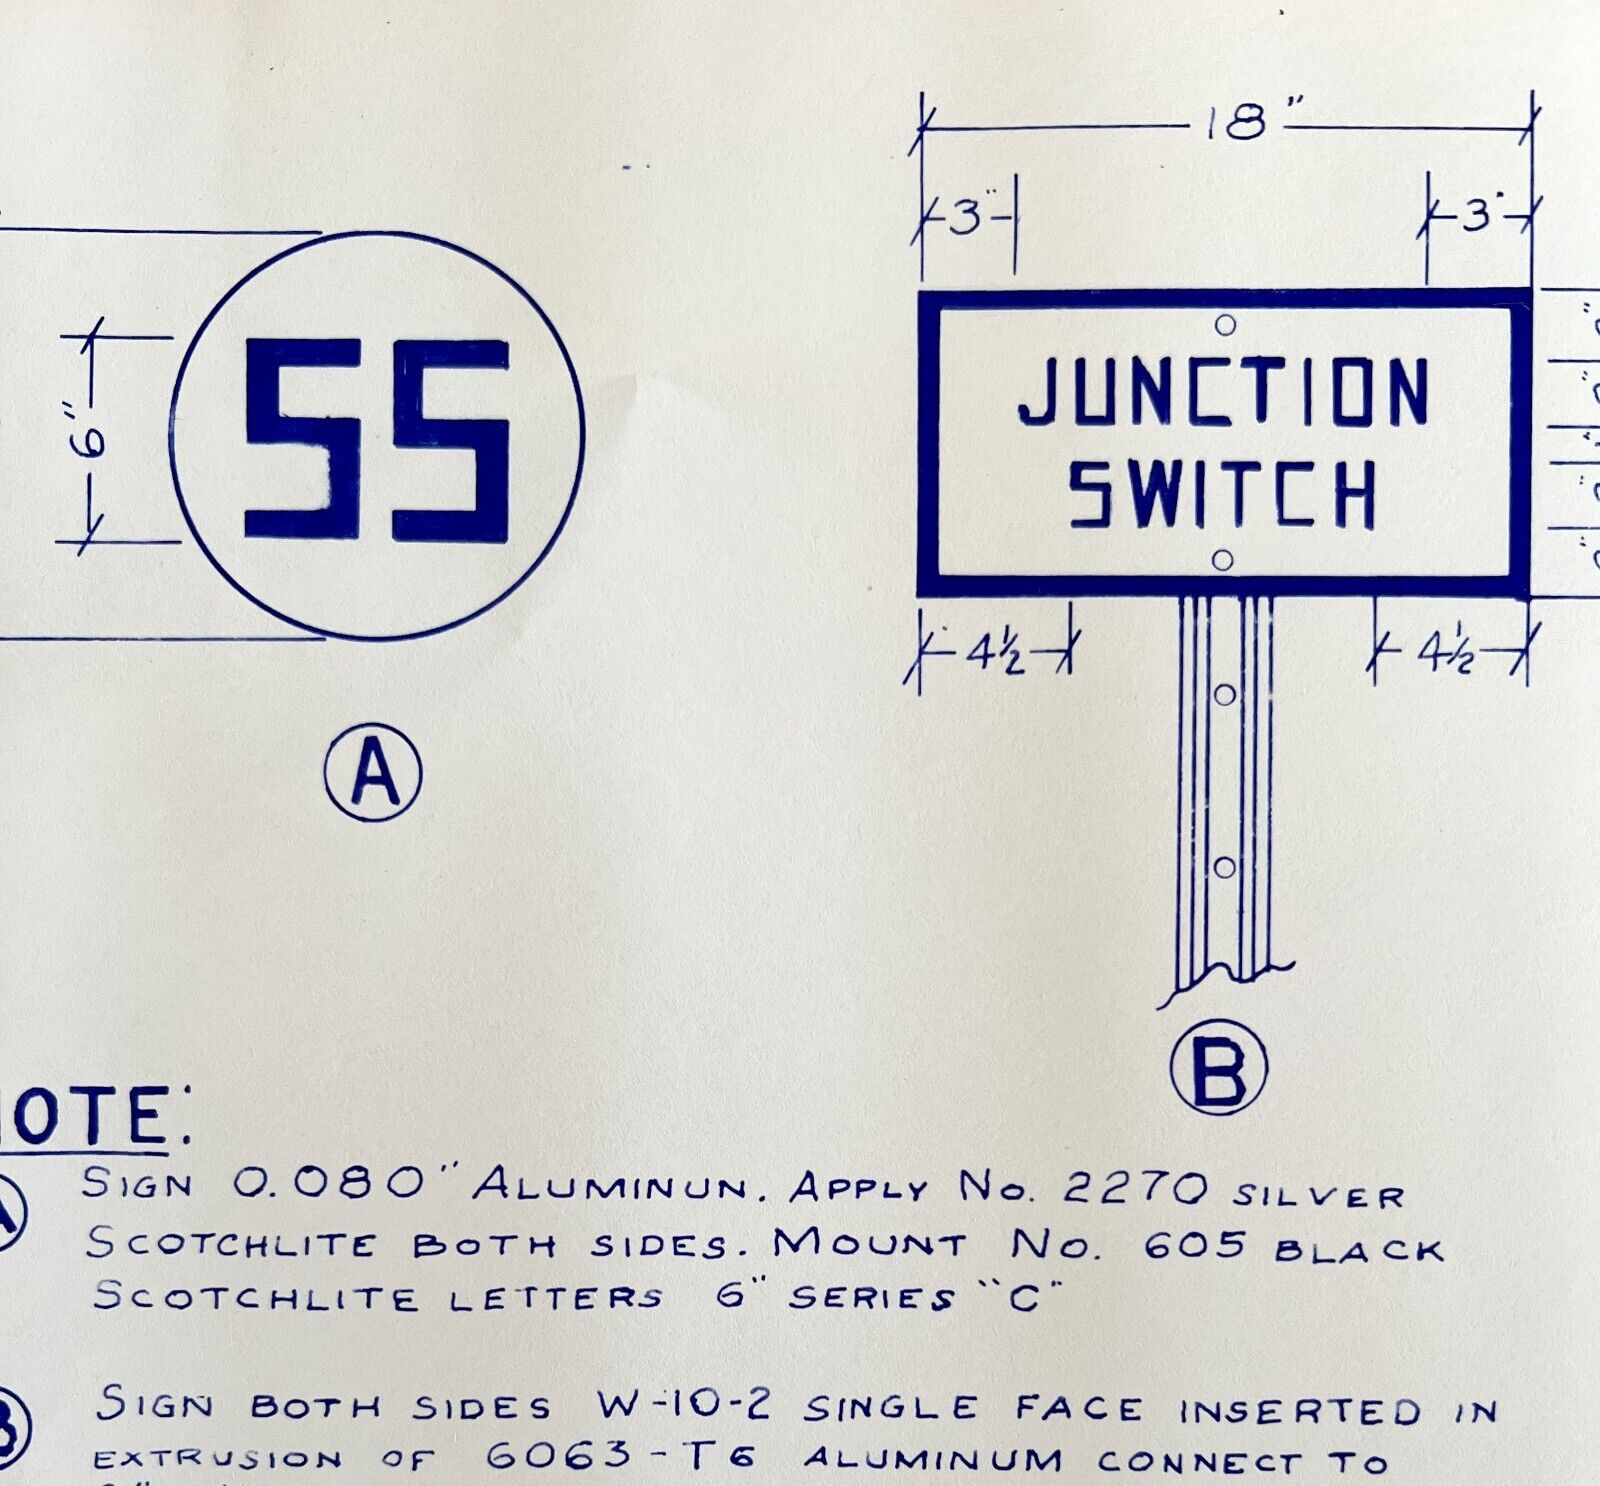 1966 Railroad Bangor Aroostook Junction Switch Signs Blueprint K14 Trains DWDD12